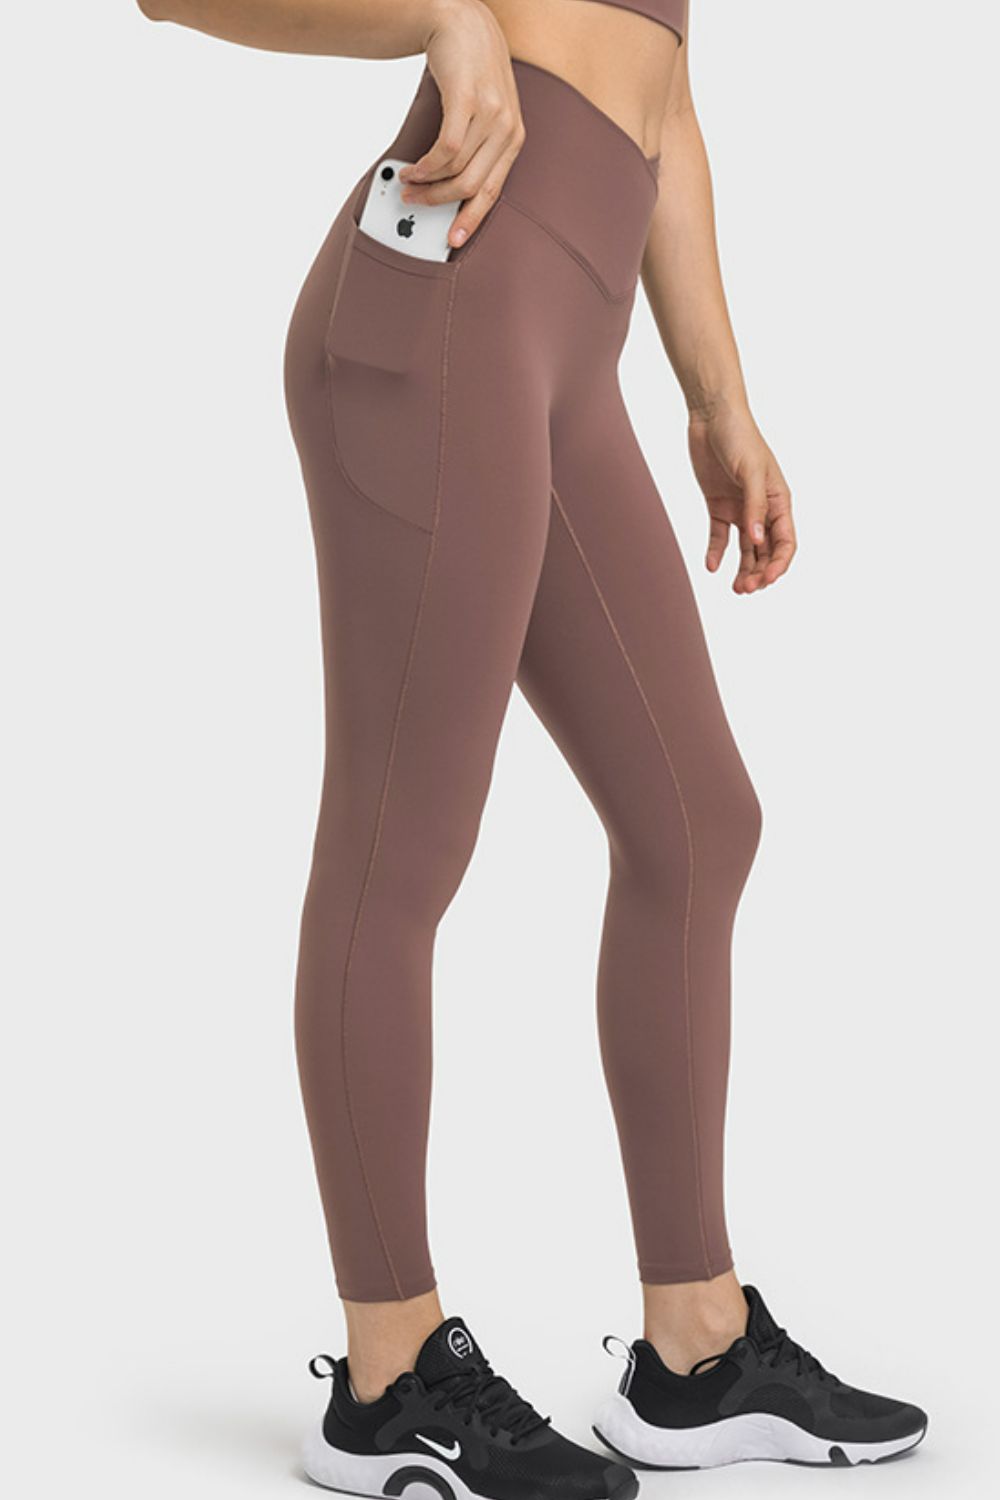 V-Waist Yoga Leggings with Pockets Print on any thing USA/STOD clothes